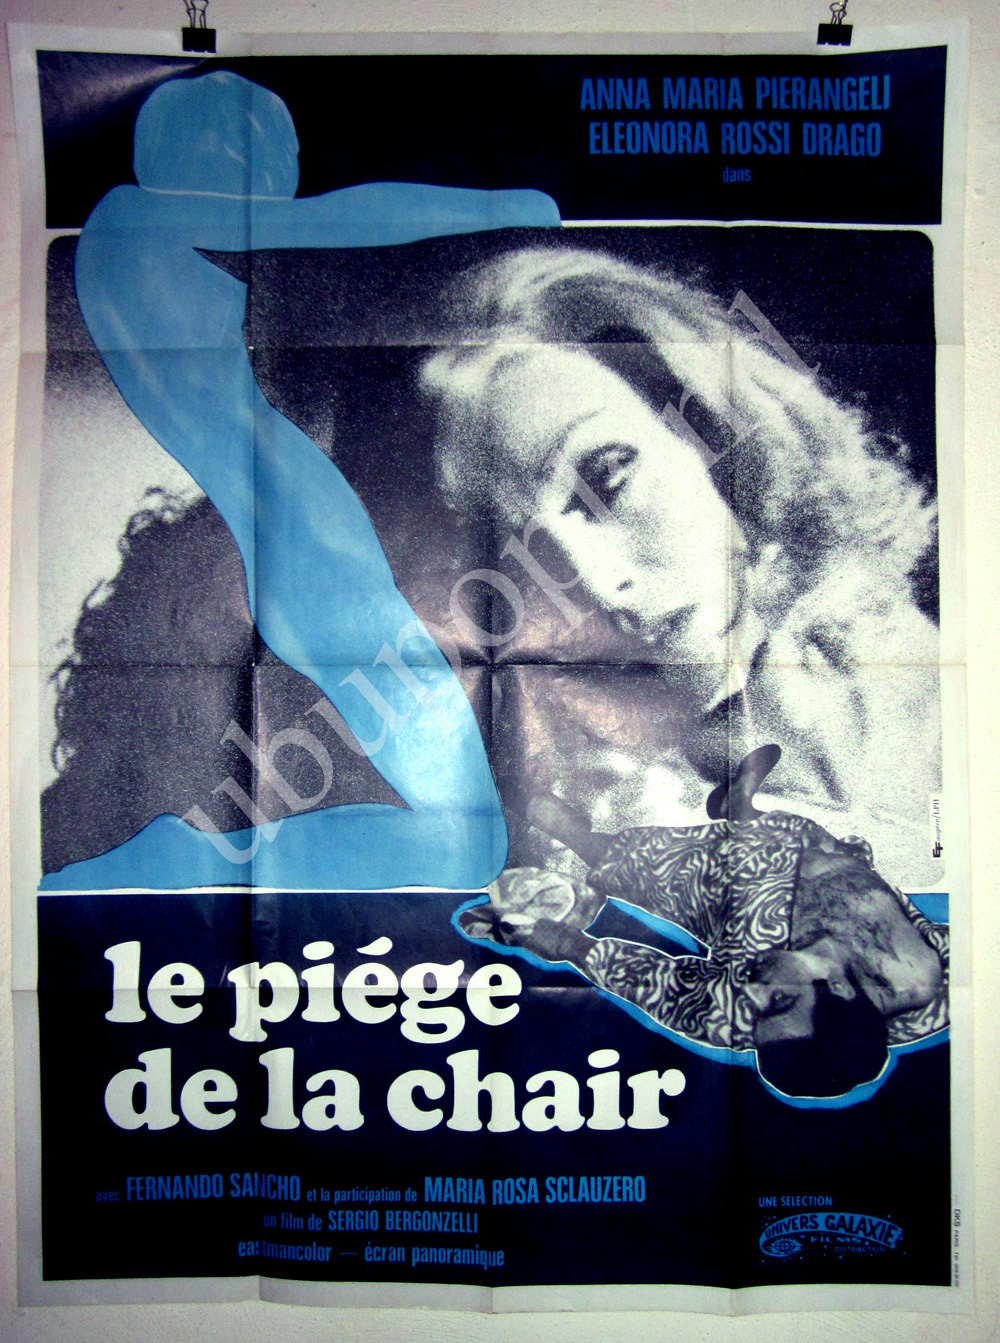 60s Porn Posters - Ubupopland: Shop of rare vintage 60s 70s original movie posters